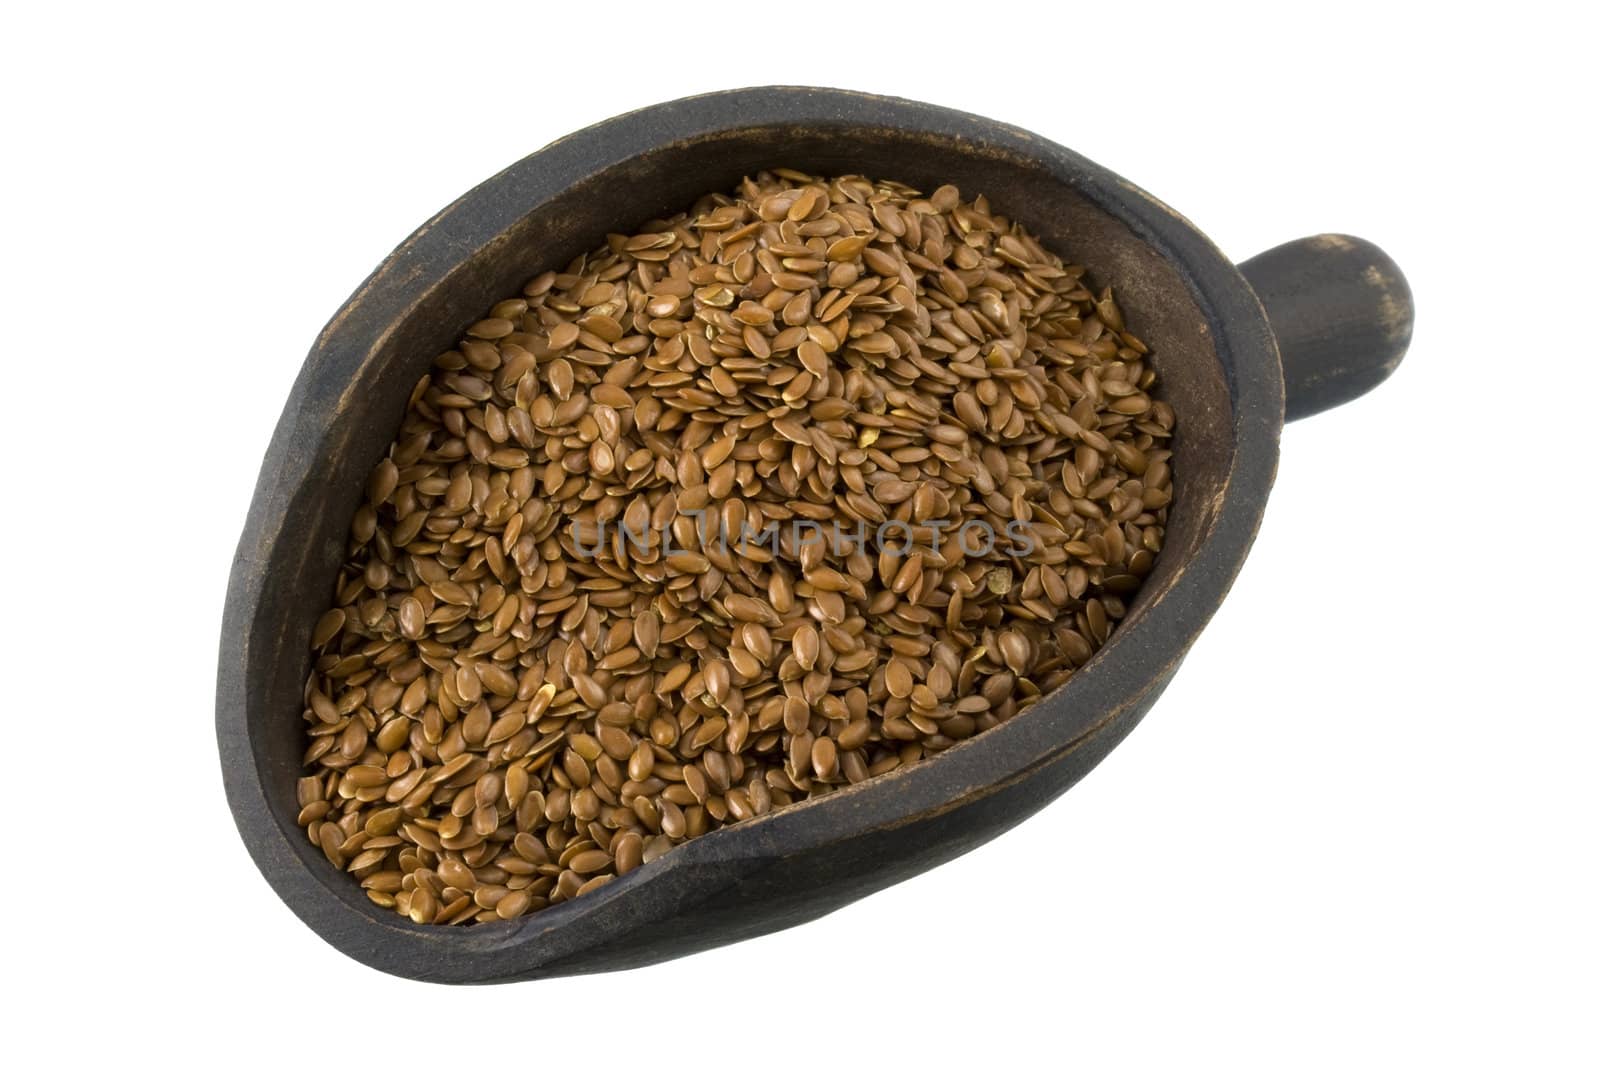 scoop of brown flax seeds by PixelsAway